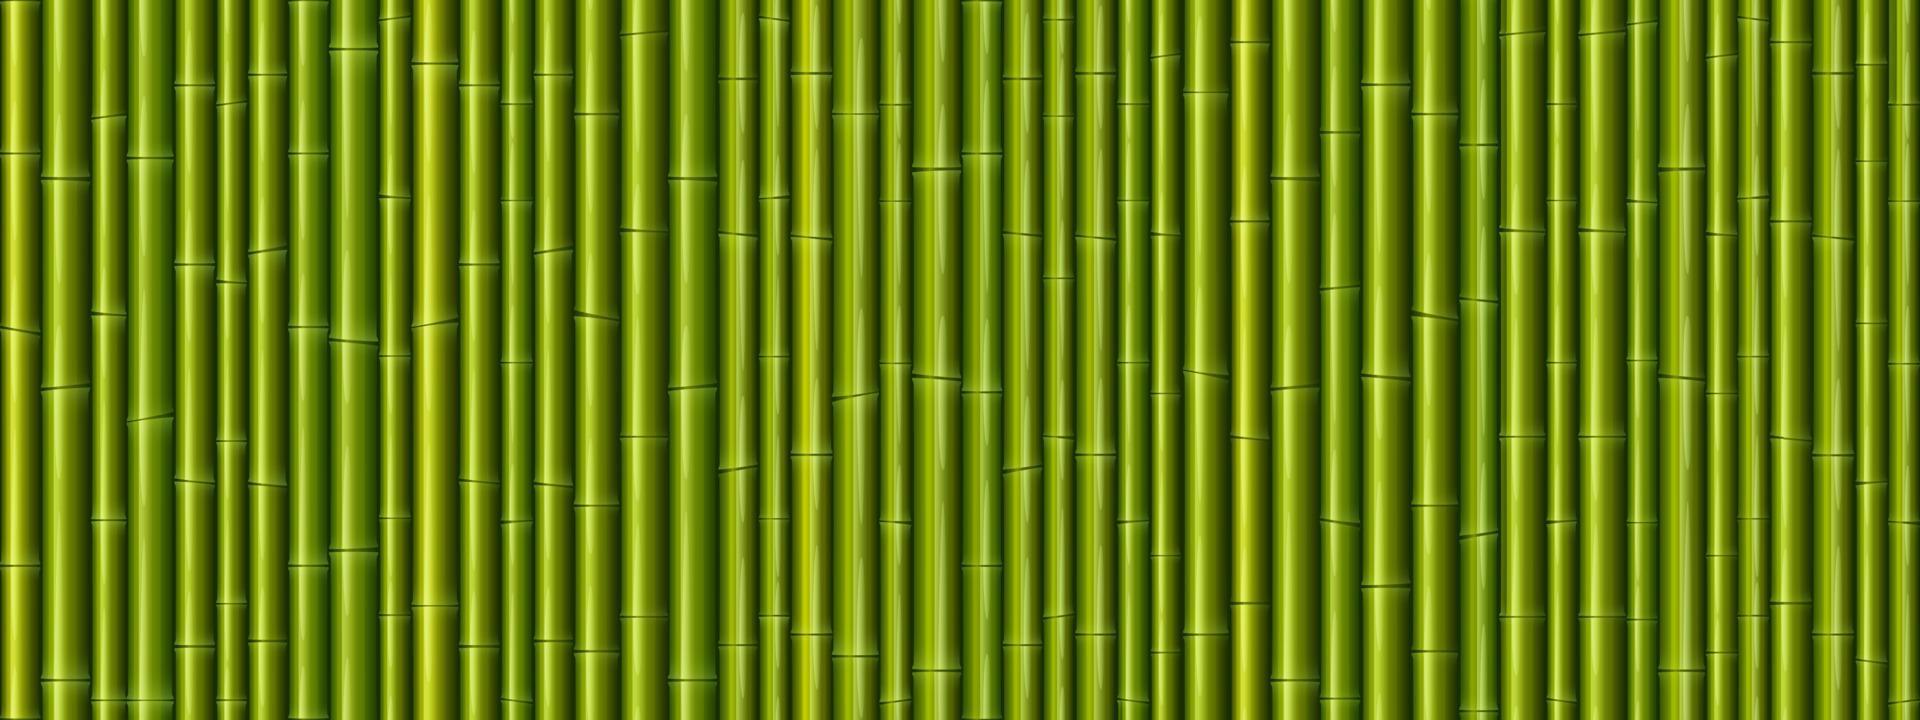 patrón sin costuras de textura de pared de bambú vector